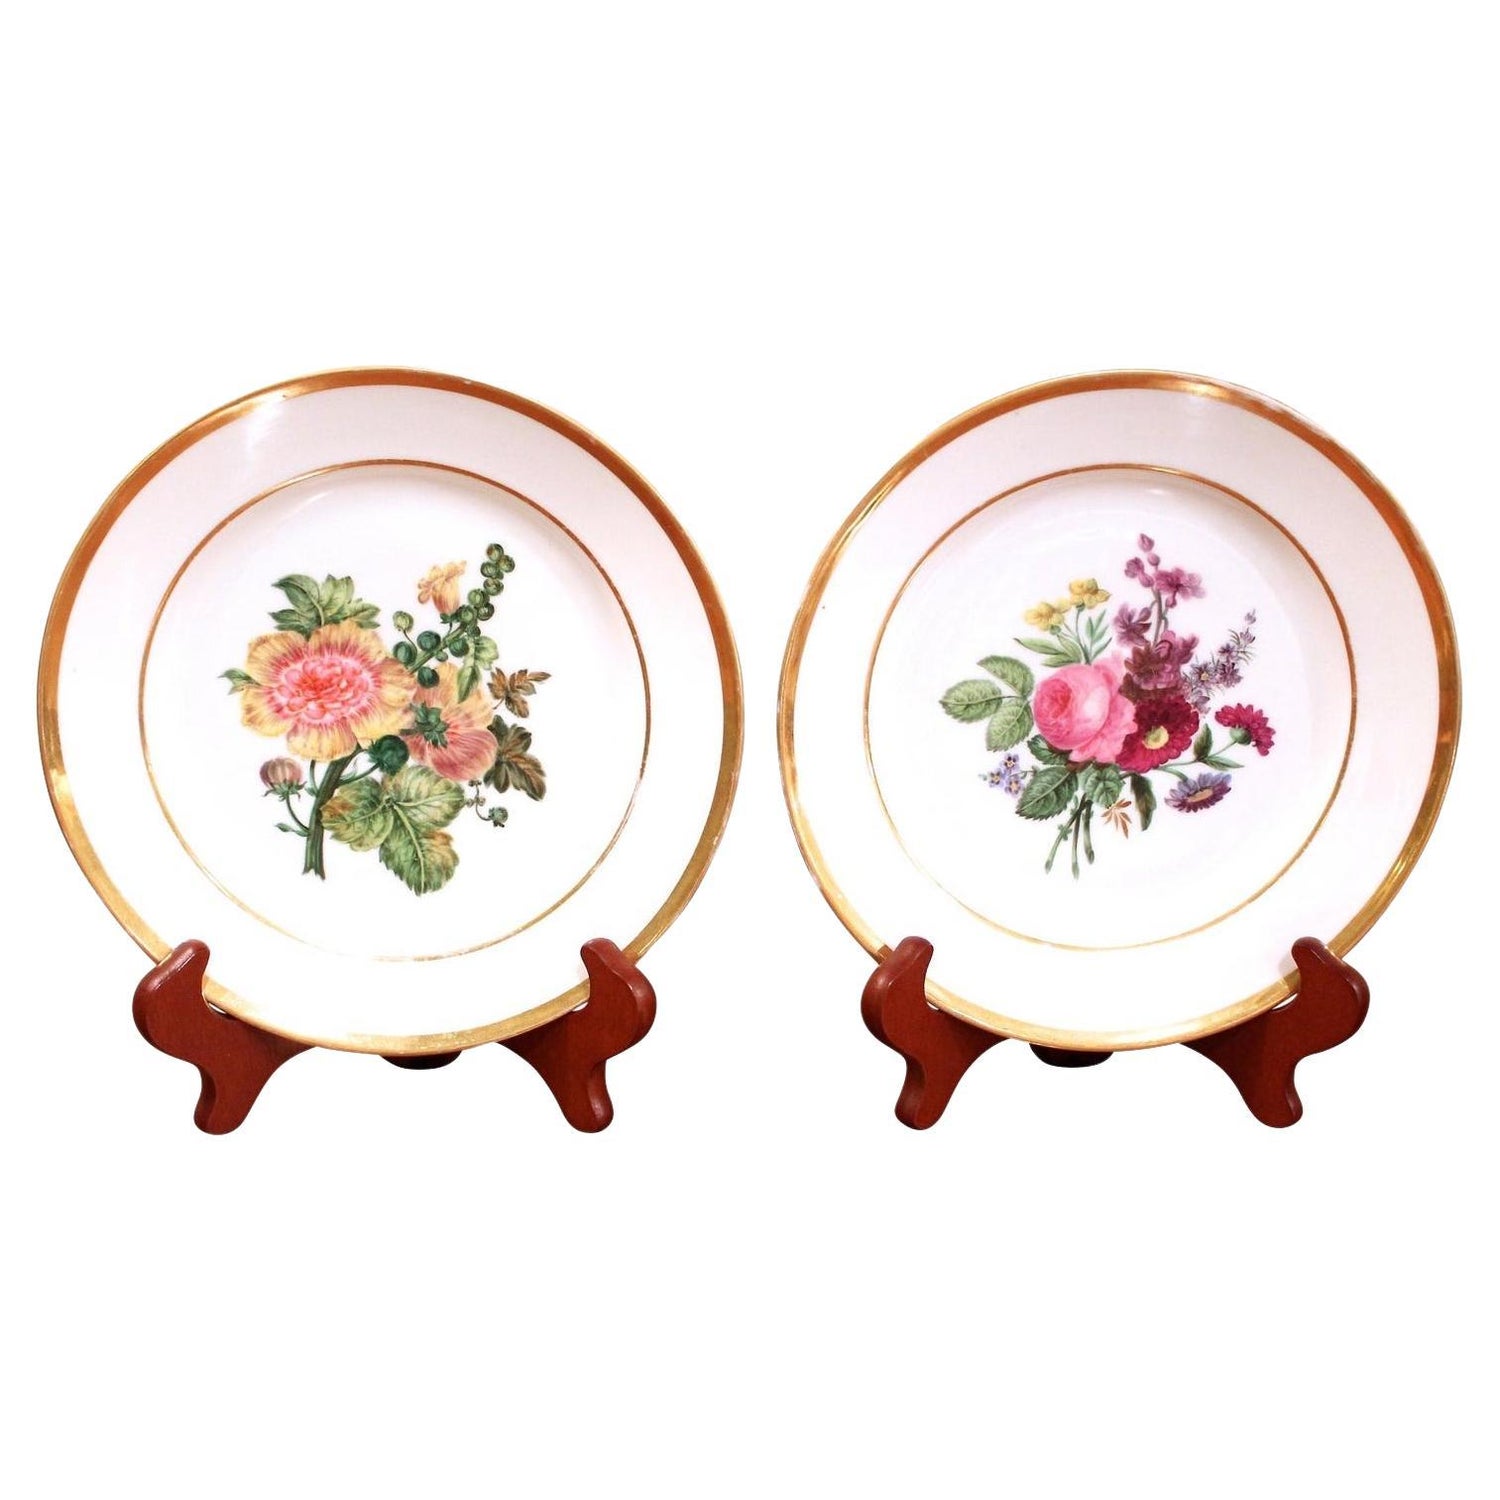 https://a.1stdibscdn.com/pair-of-deroche-old-paris-porcelain-floral-plates-19th-century-for-sale/f_89772/f_372635221701098676849/f_37263522_1701098677326_bg_processed.jpg?width=1500